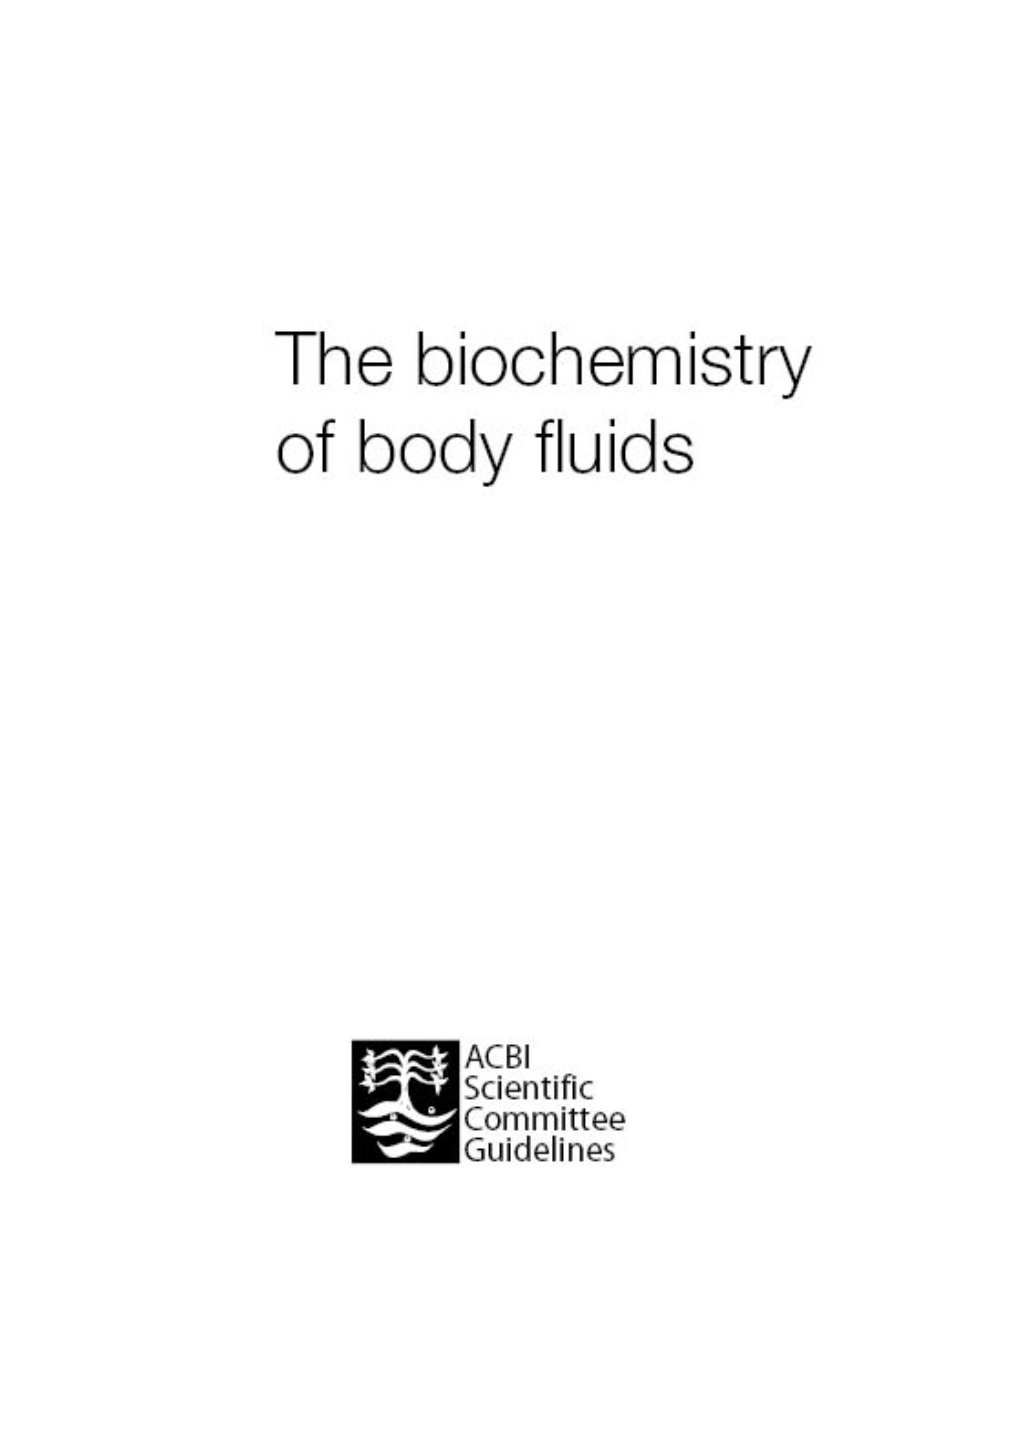 The Biochemistry of Body Fluids